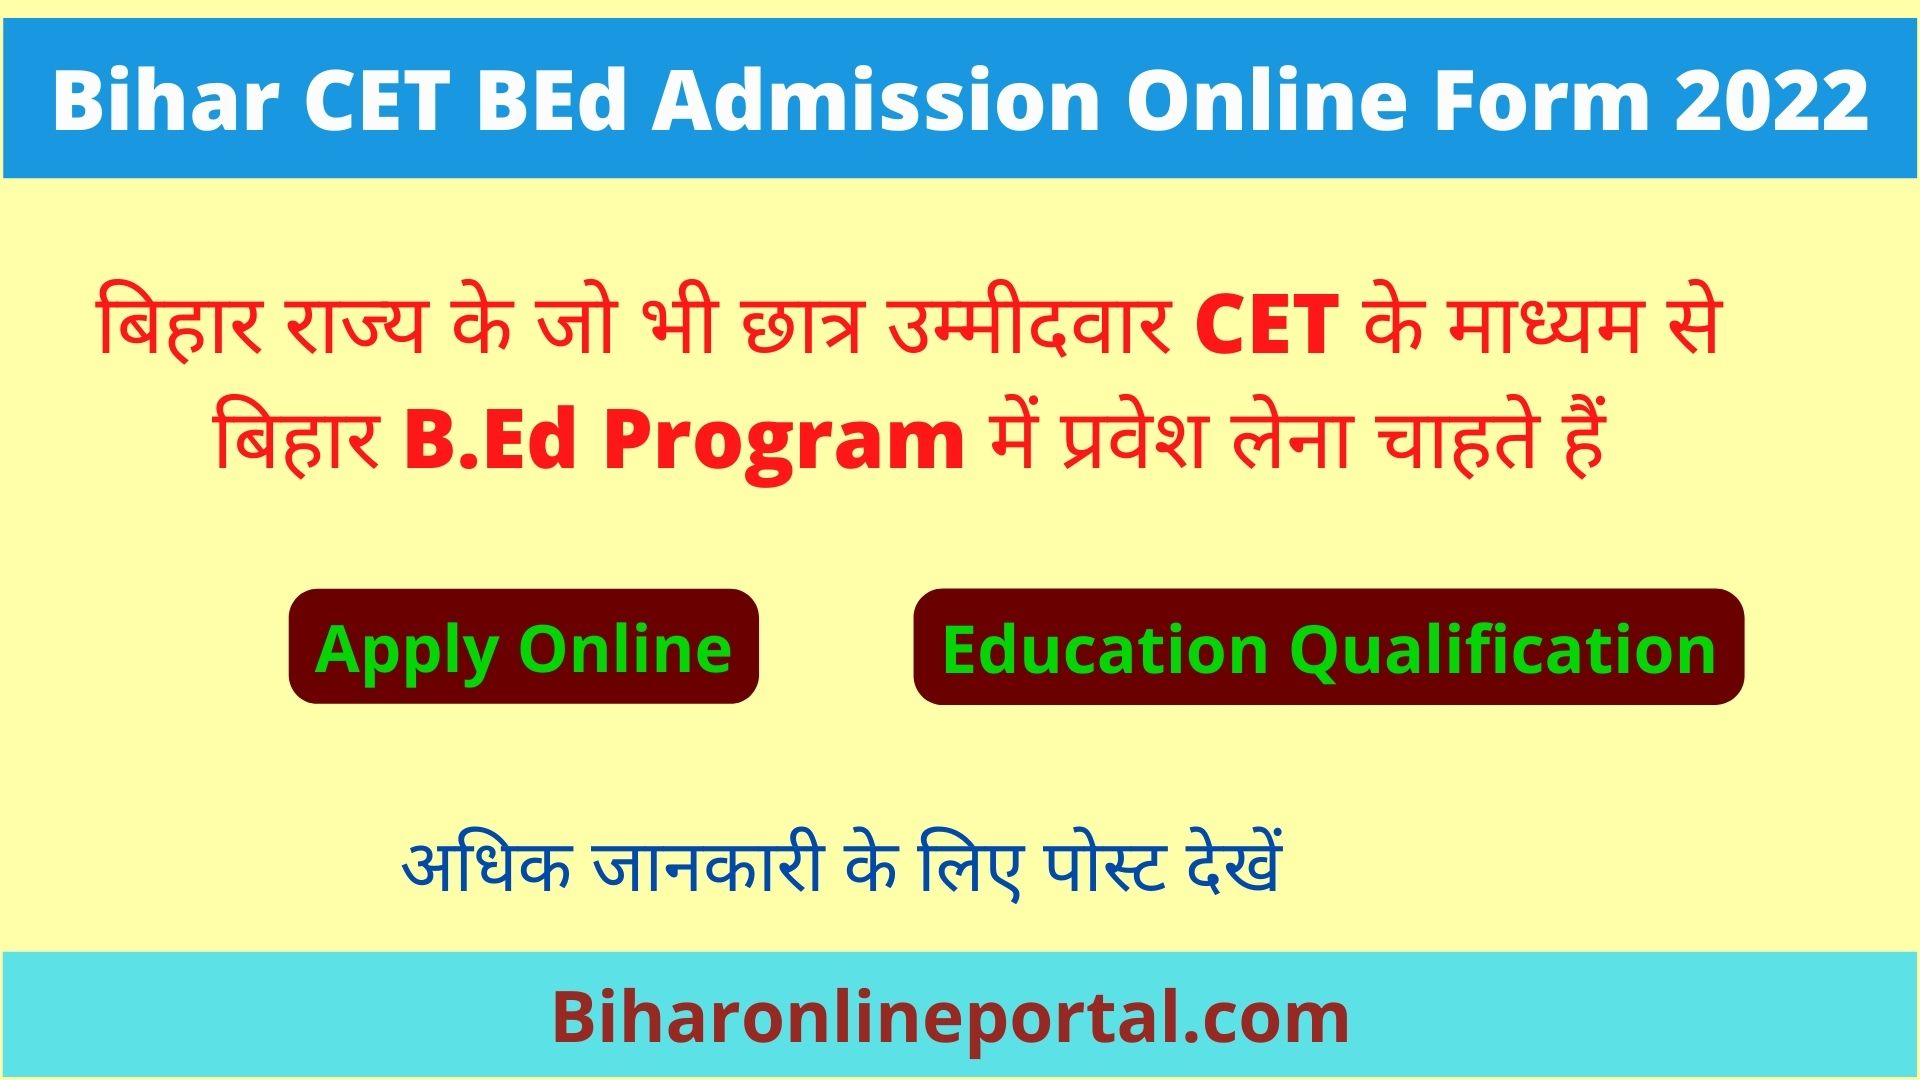 Bihar CET B.Ed Admission Online 2022